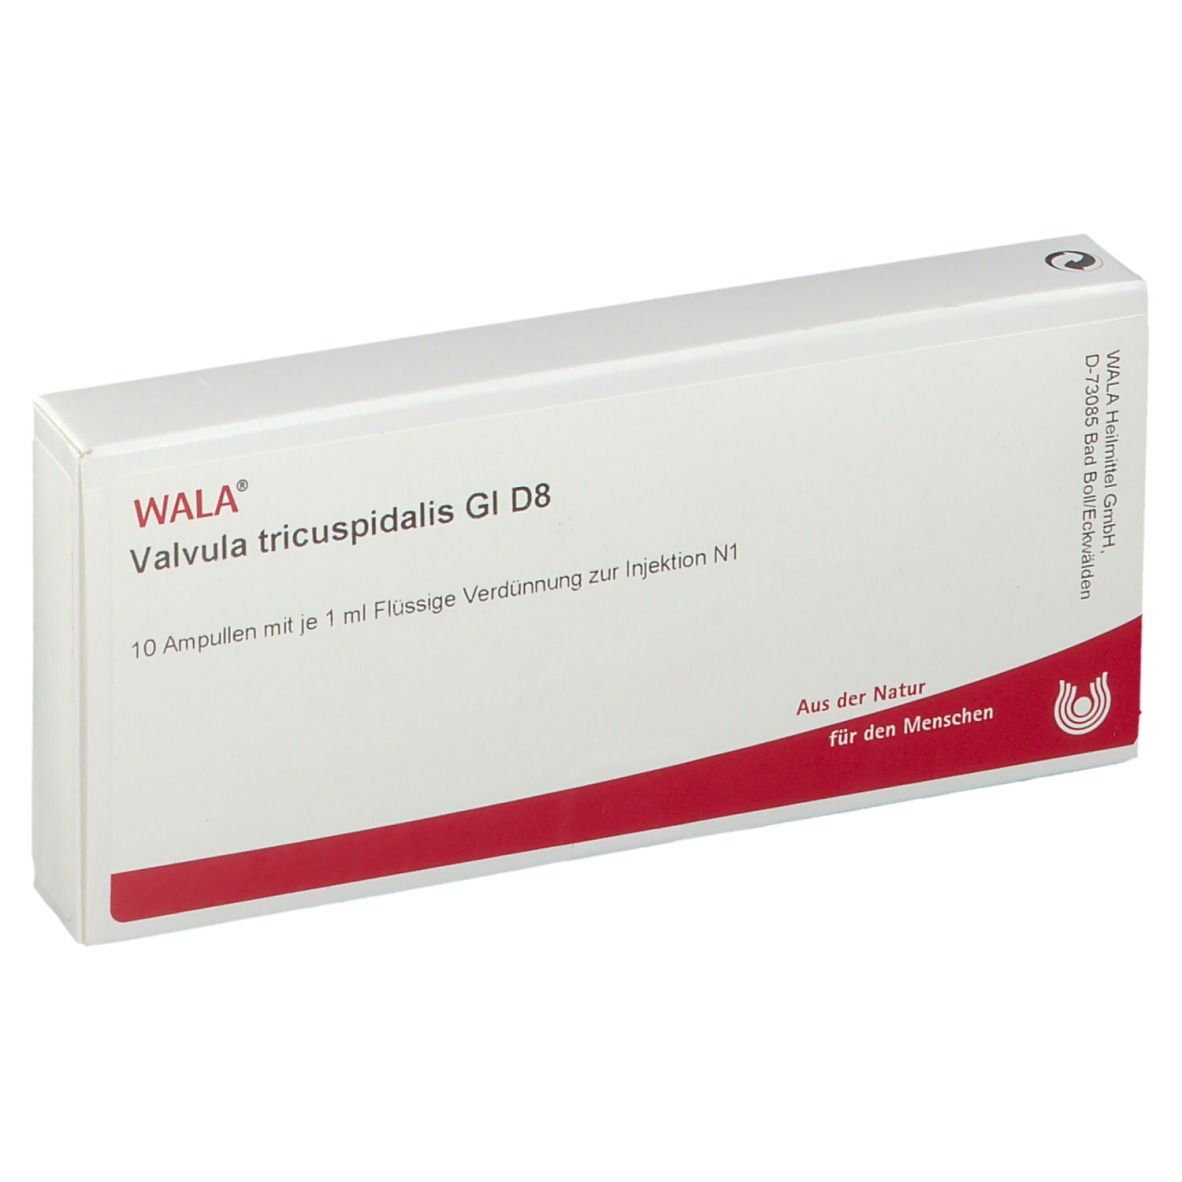 WALA® Valvula tricuspidalis Gl D 8